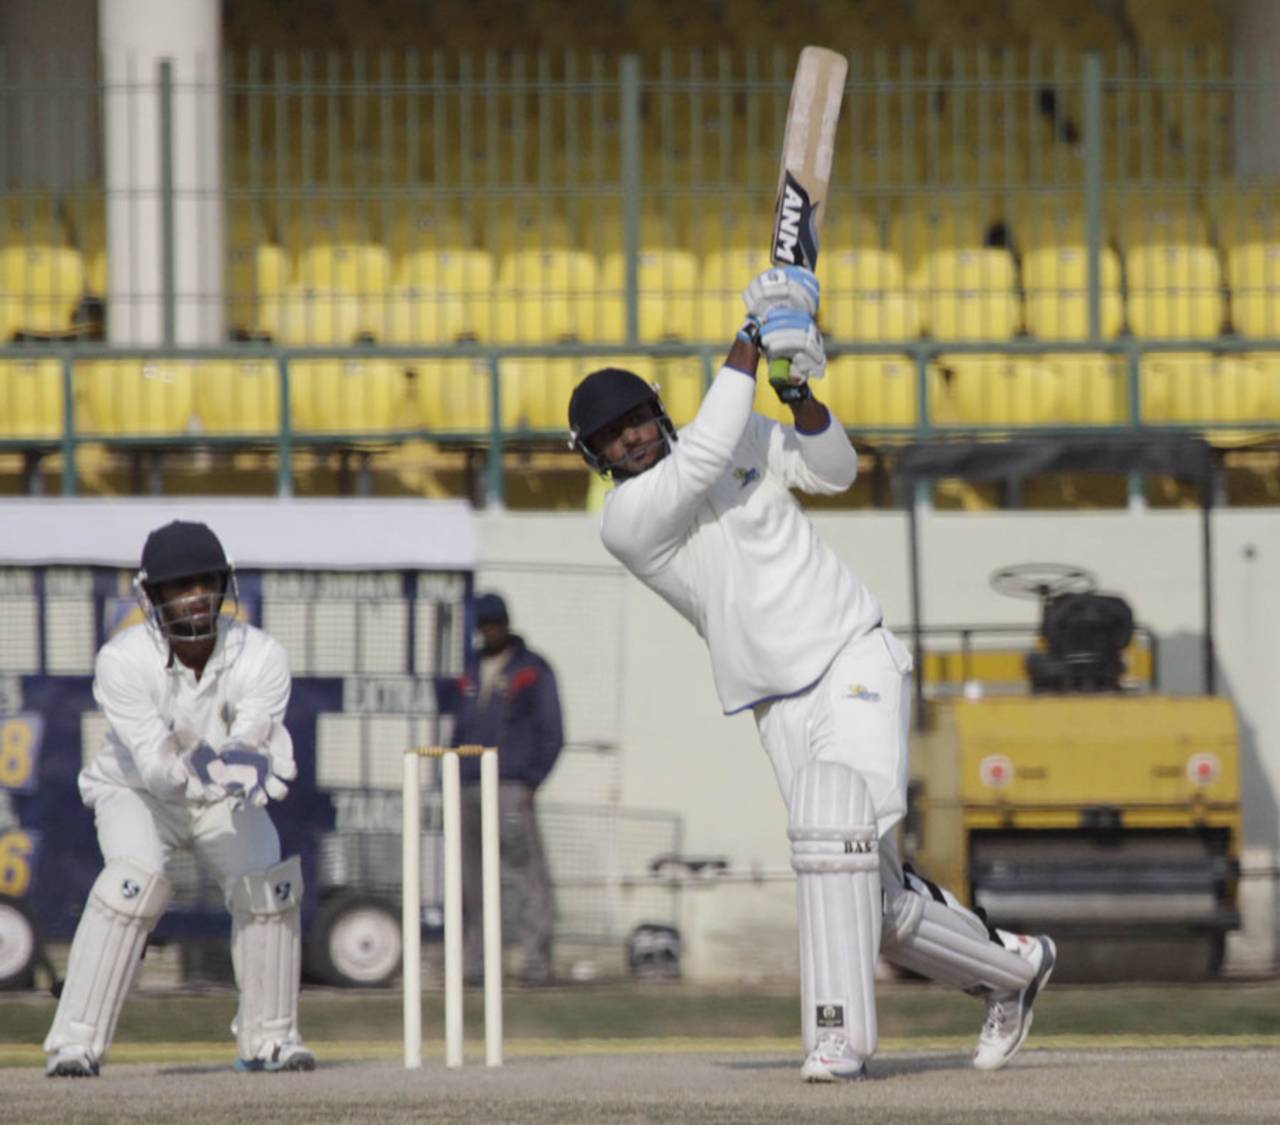 Pankaj Jaswal slammed 35 off 11 balls, Himachal Pradesh v Kerala, Ranji Trophy, Group C, Dharamsala, 3rd day, January 7, 2015